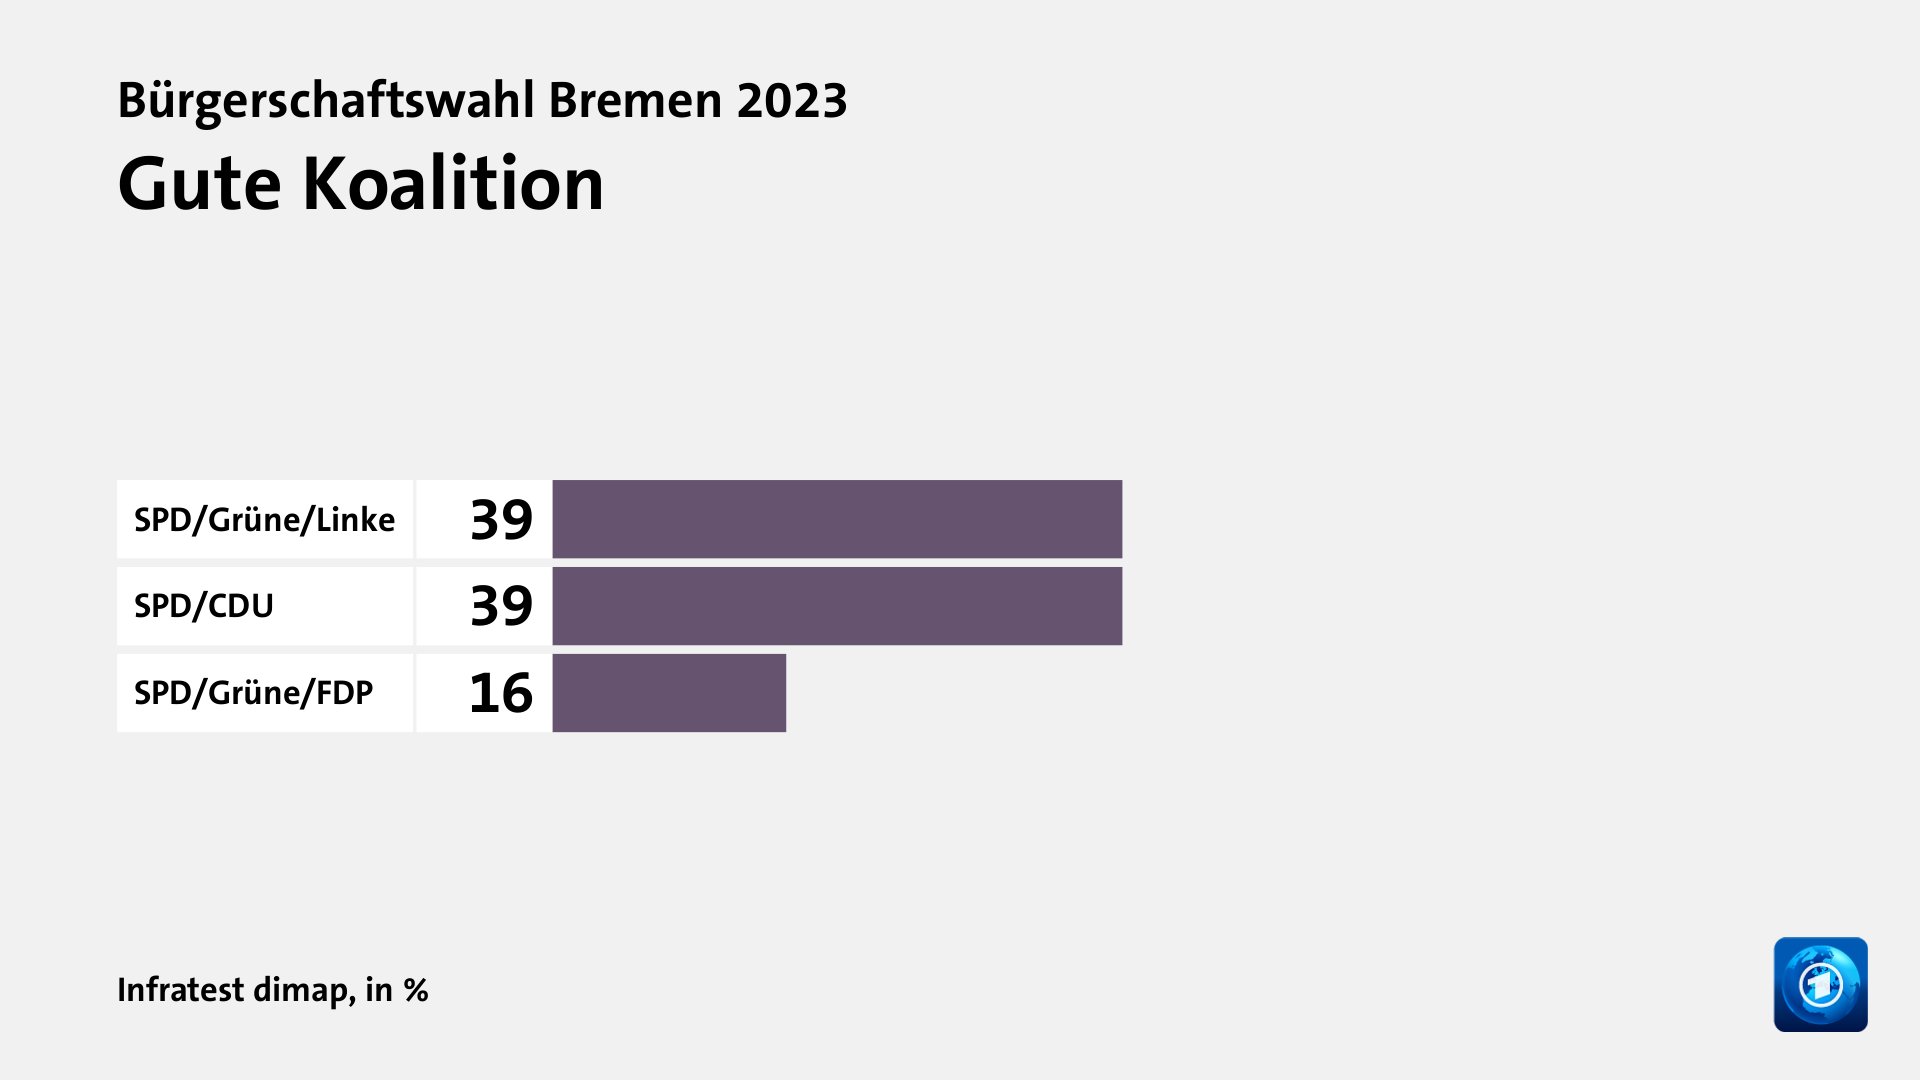 Gute Koalition, in %: SPD/Grüne/Linke 39, SPD/CDU 39, SPD/Grüne/FDP 16, Quelle: Infratest dimap